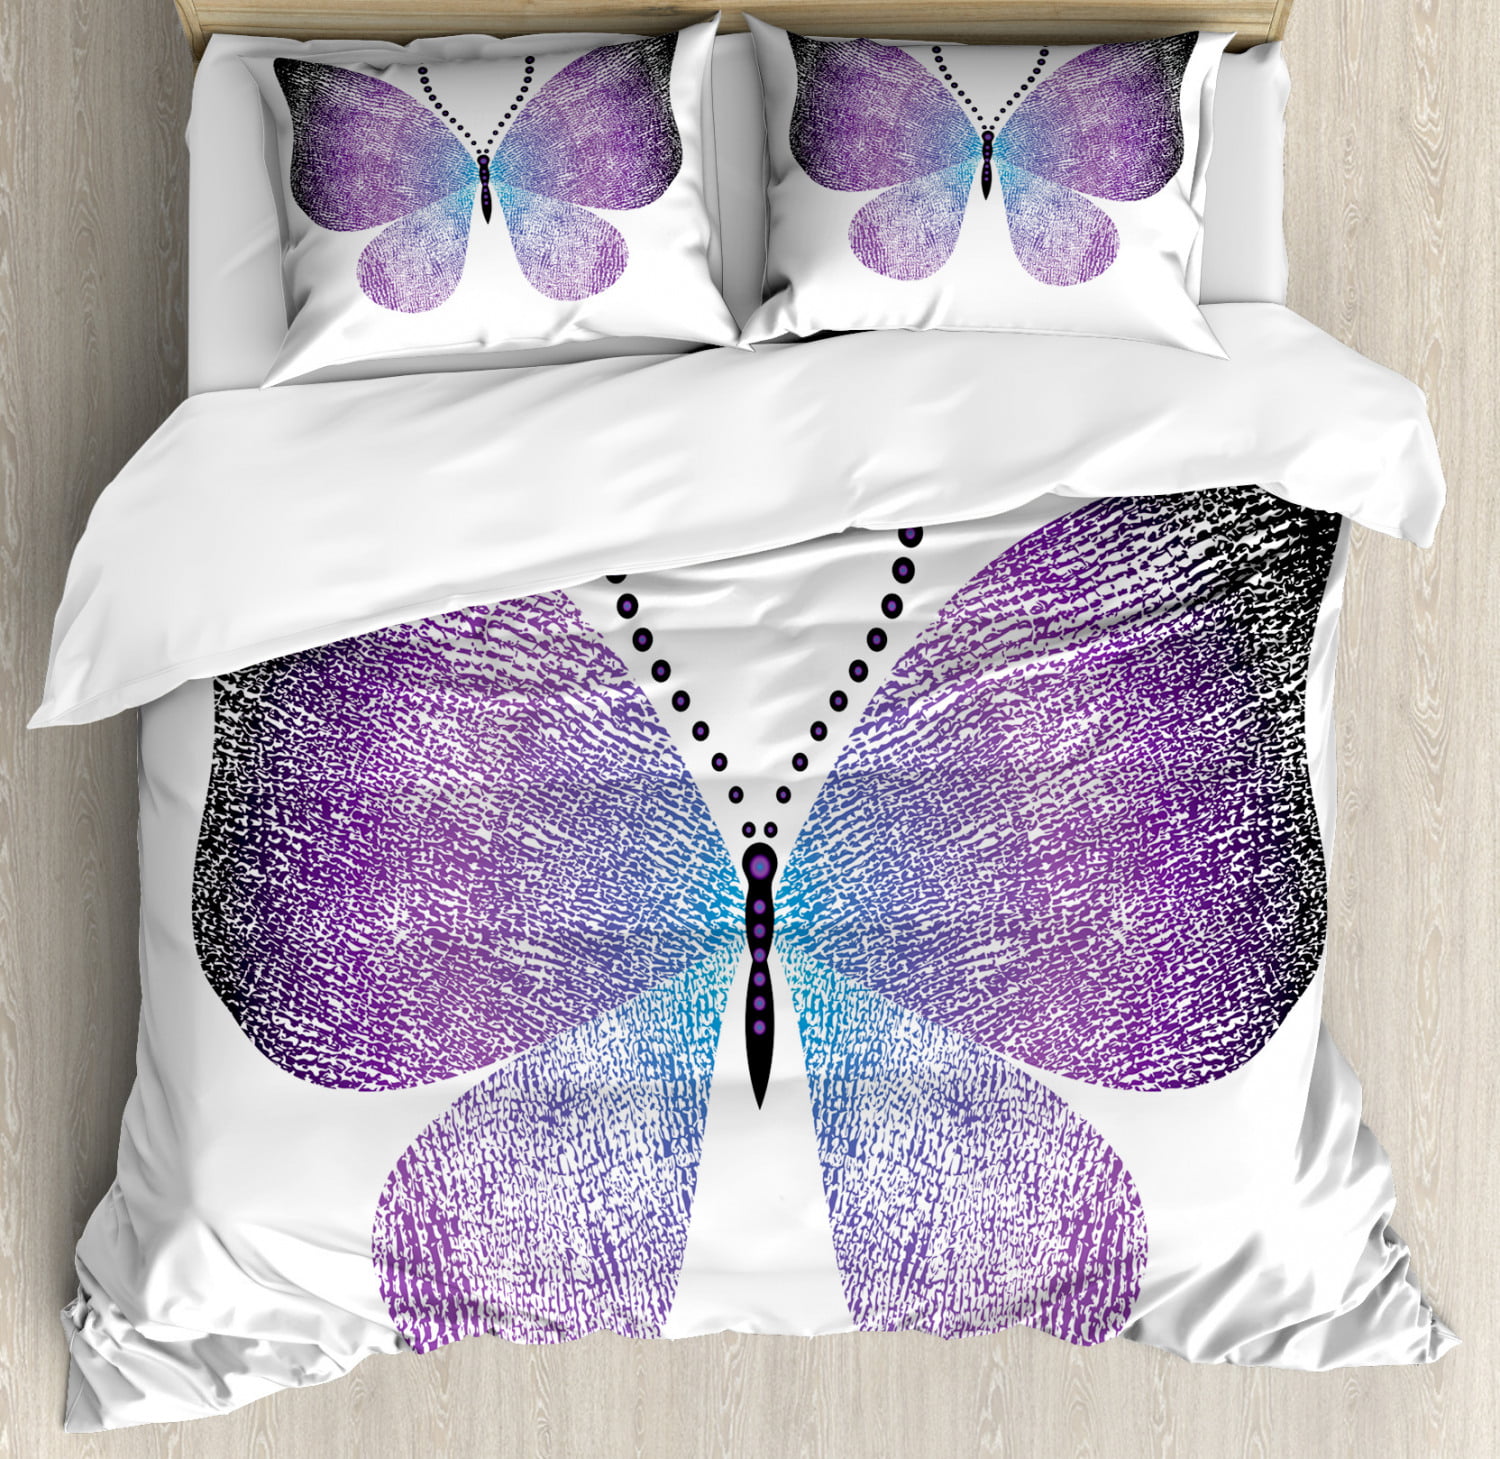 Luxury 6pc Plum Purple Ombre Duvet Cover Bedding Set AND Decorative Pillows